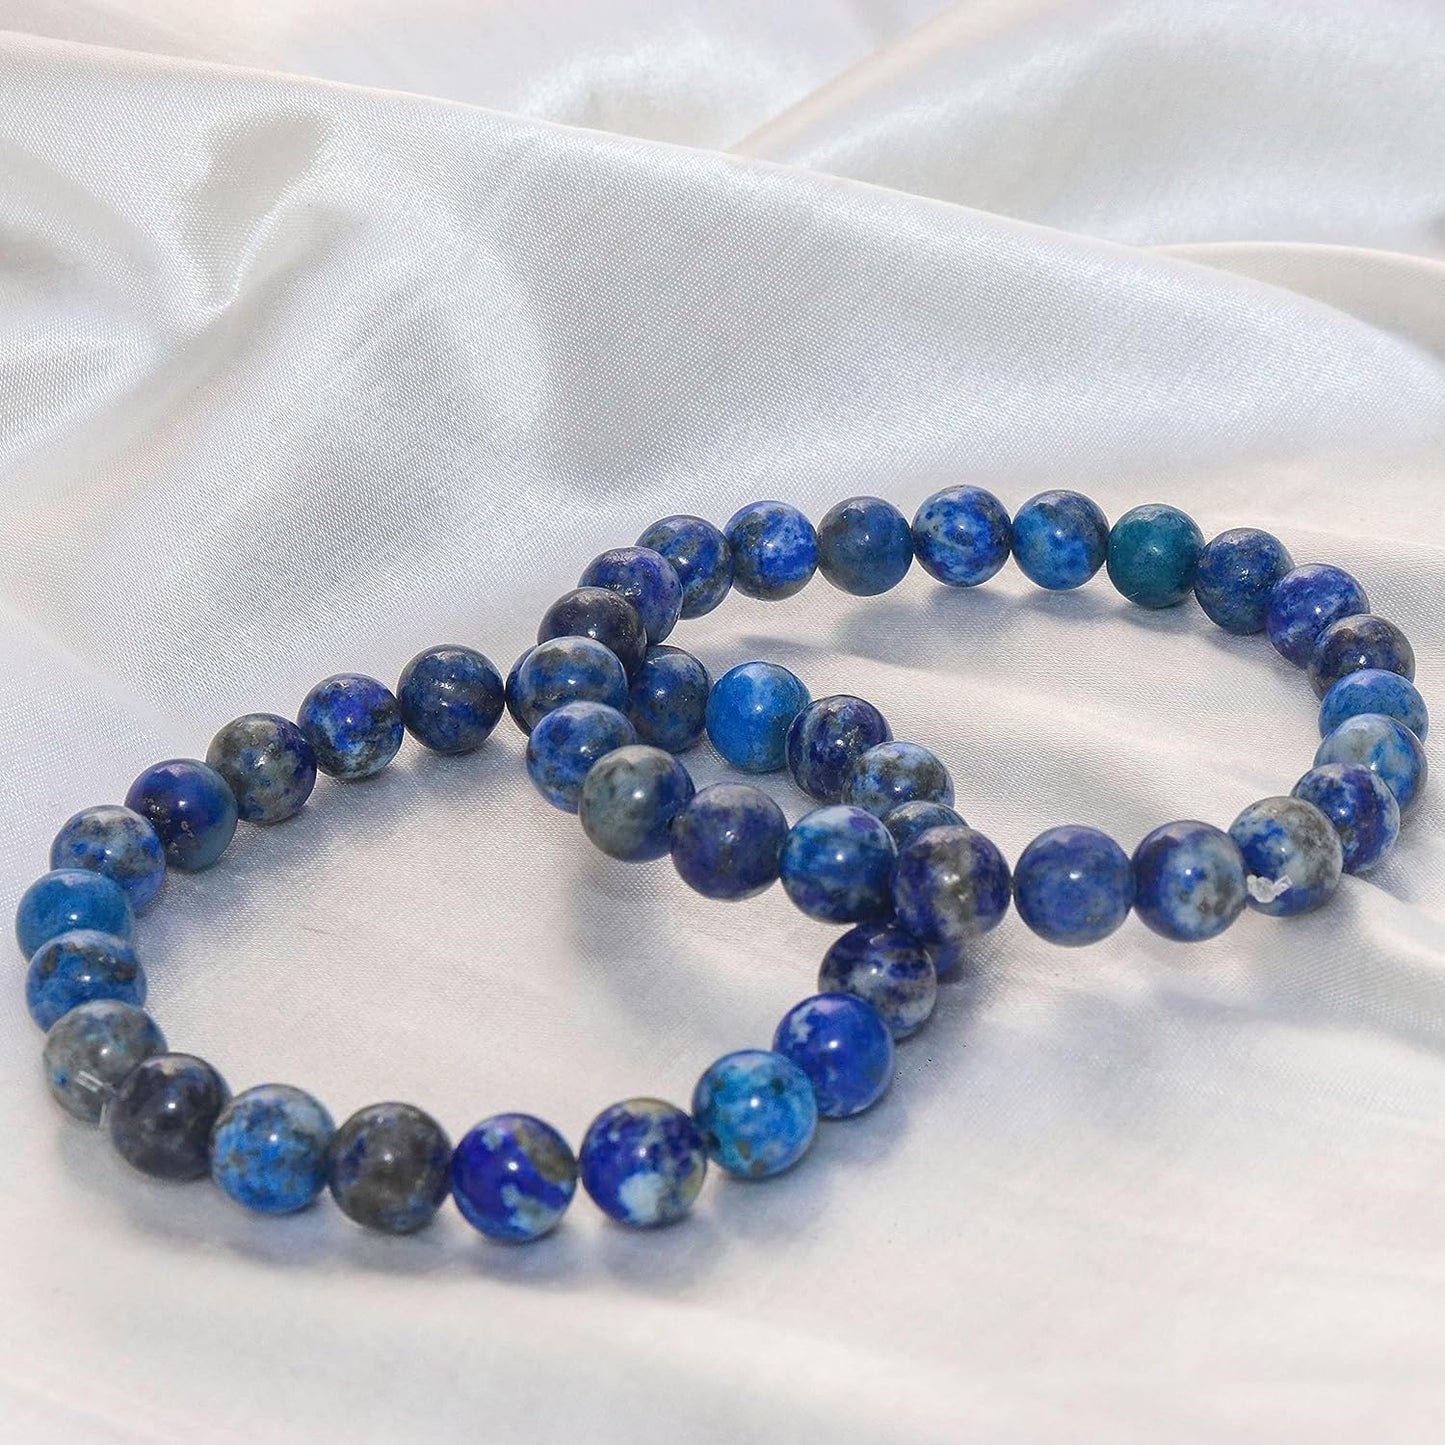 Lapis Lazuli crystal Bracelet for Wisdom and Creativity | Natural Gemstone Reiki Healing Crystals Handmade 8mm Round Beads Stretch Bracelet for Women & Men | Spiritual Gift for her